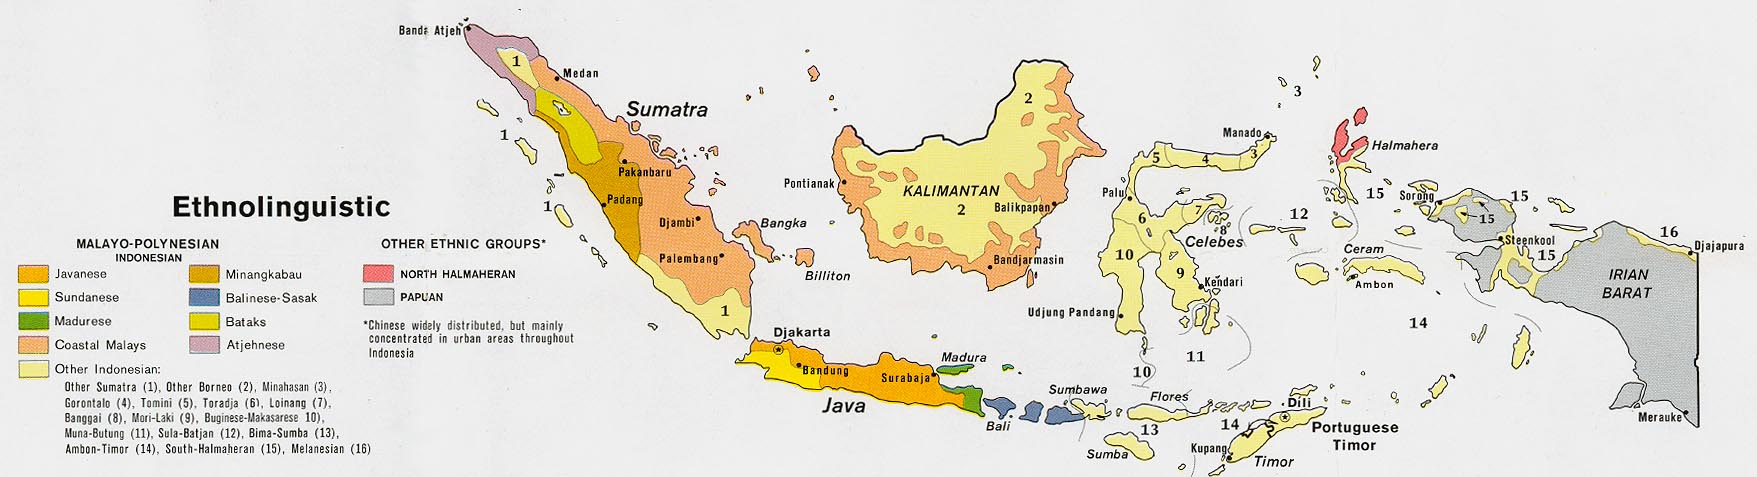 indonesia_ethno_1972